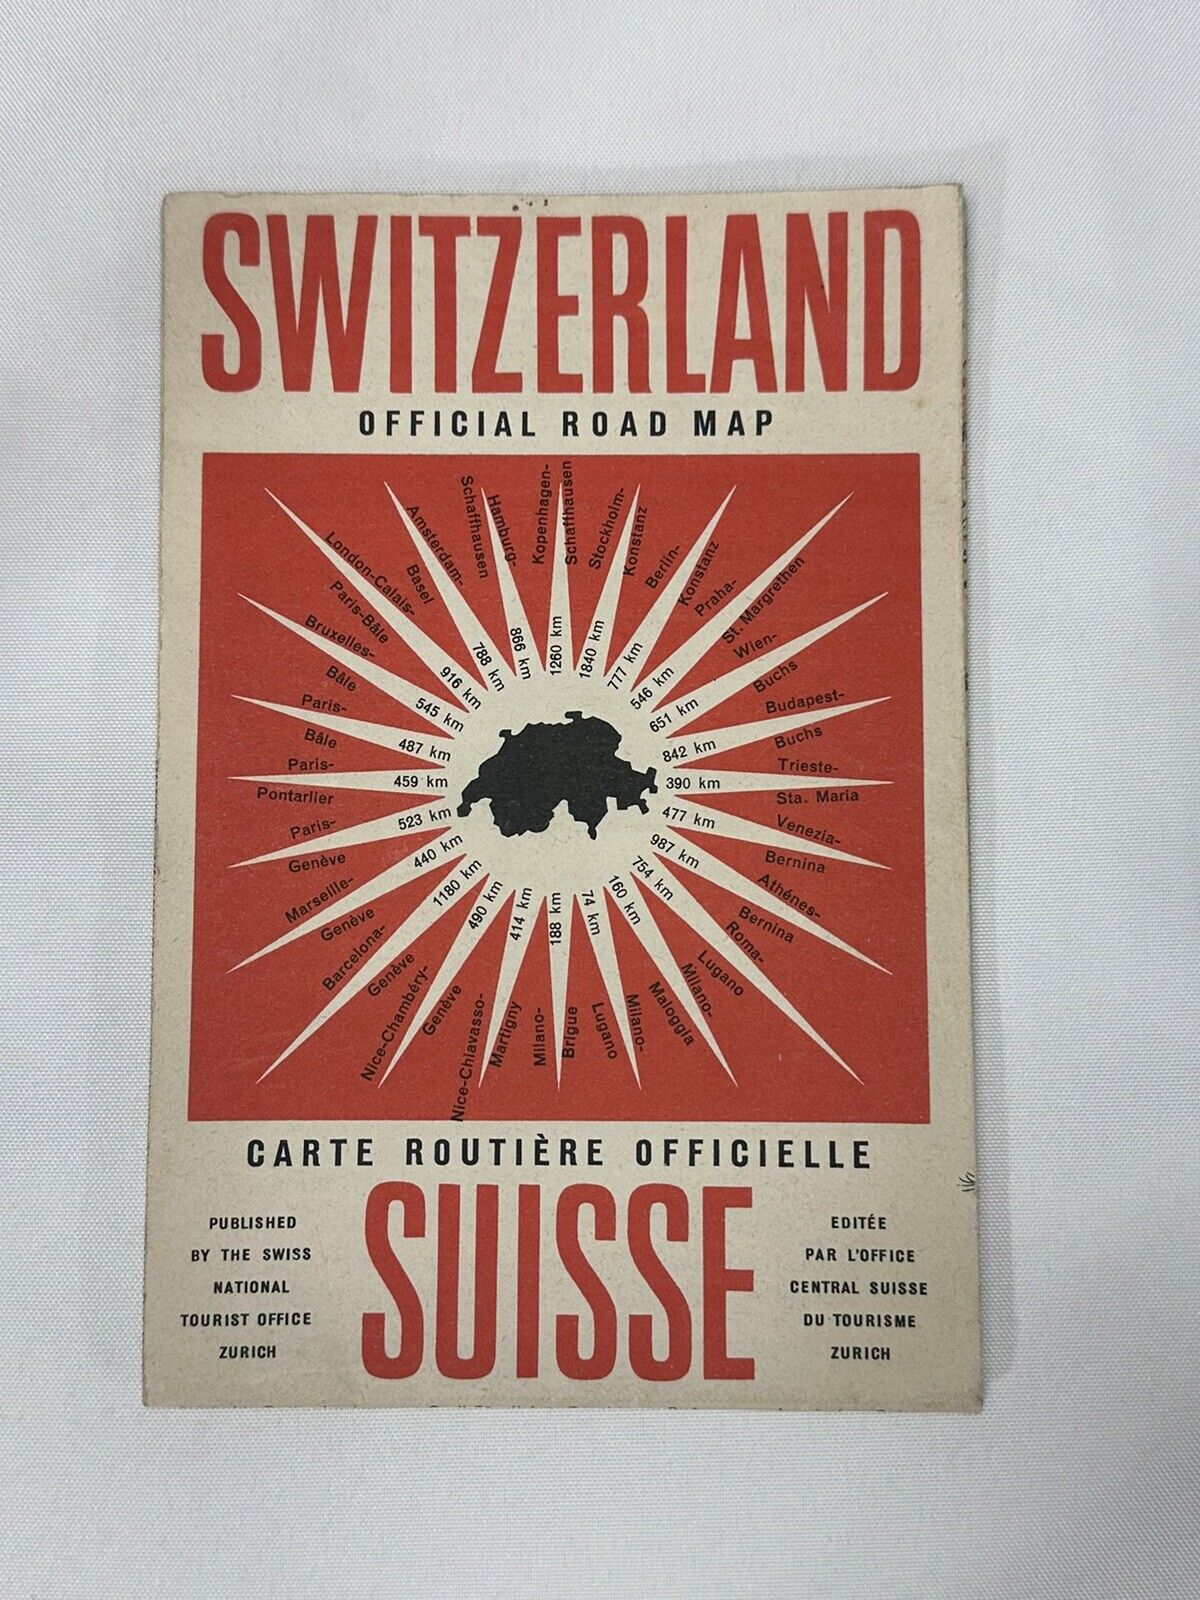 Vintage Official Road Map Of Switzerland Swiss National Tourist Office Zurich